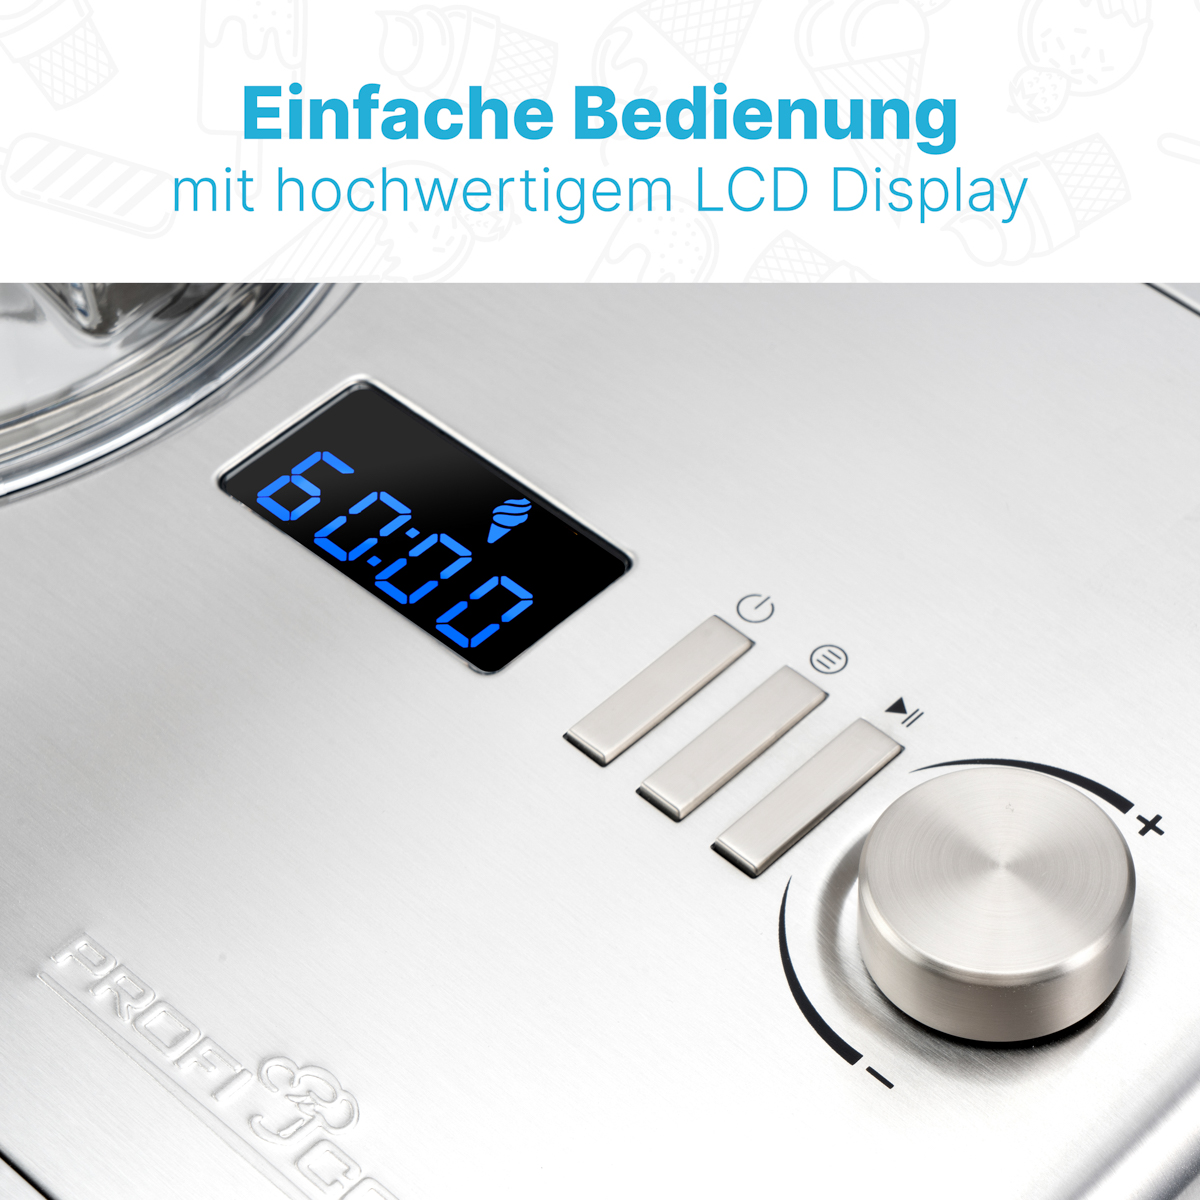 N PROFICOOK ETM Edelstahl) 1091 PC-ICM Eismaschine 08/17 (150 Watt, GUT